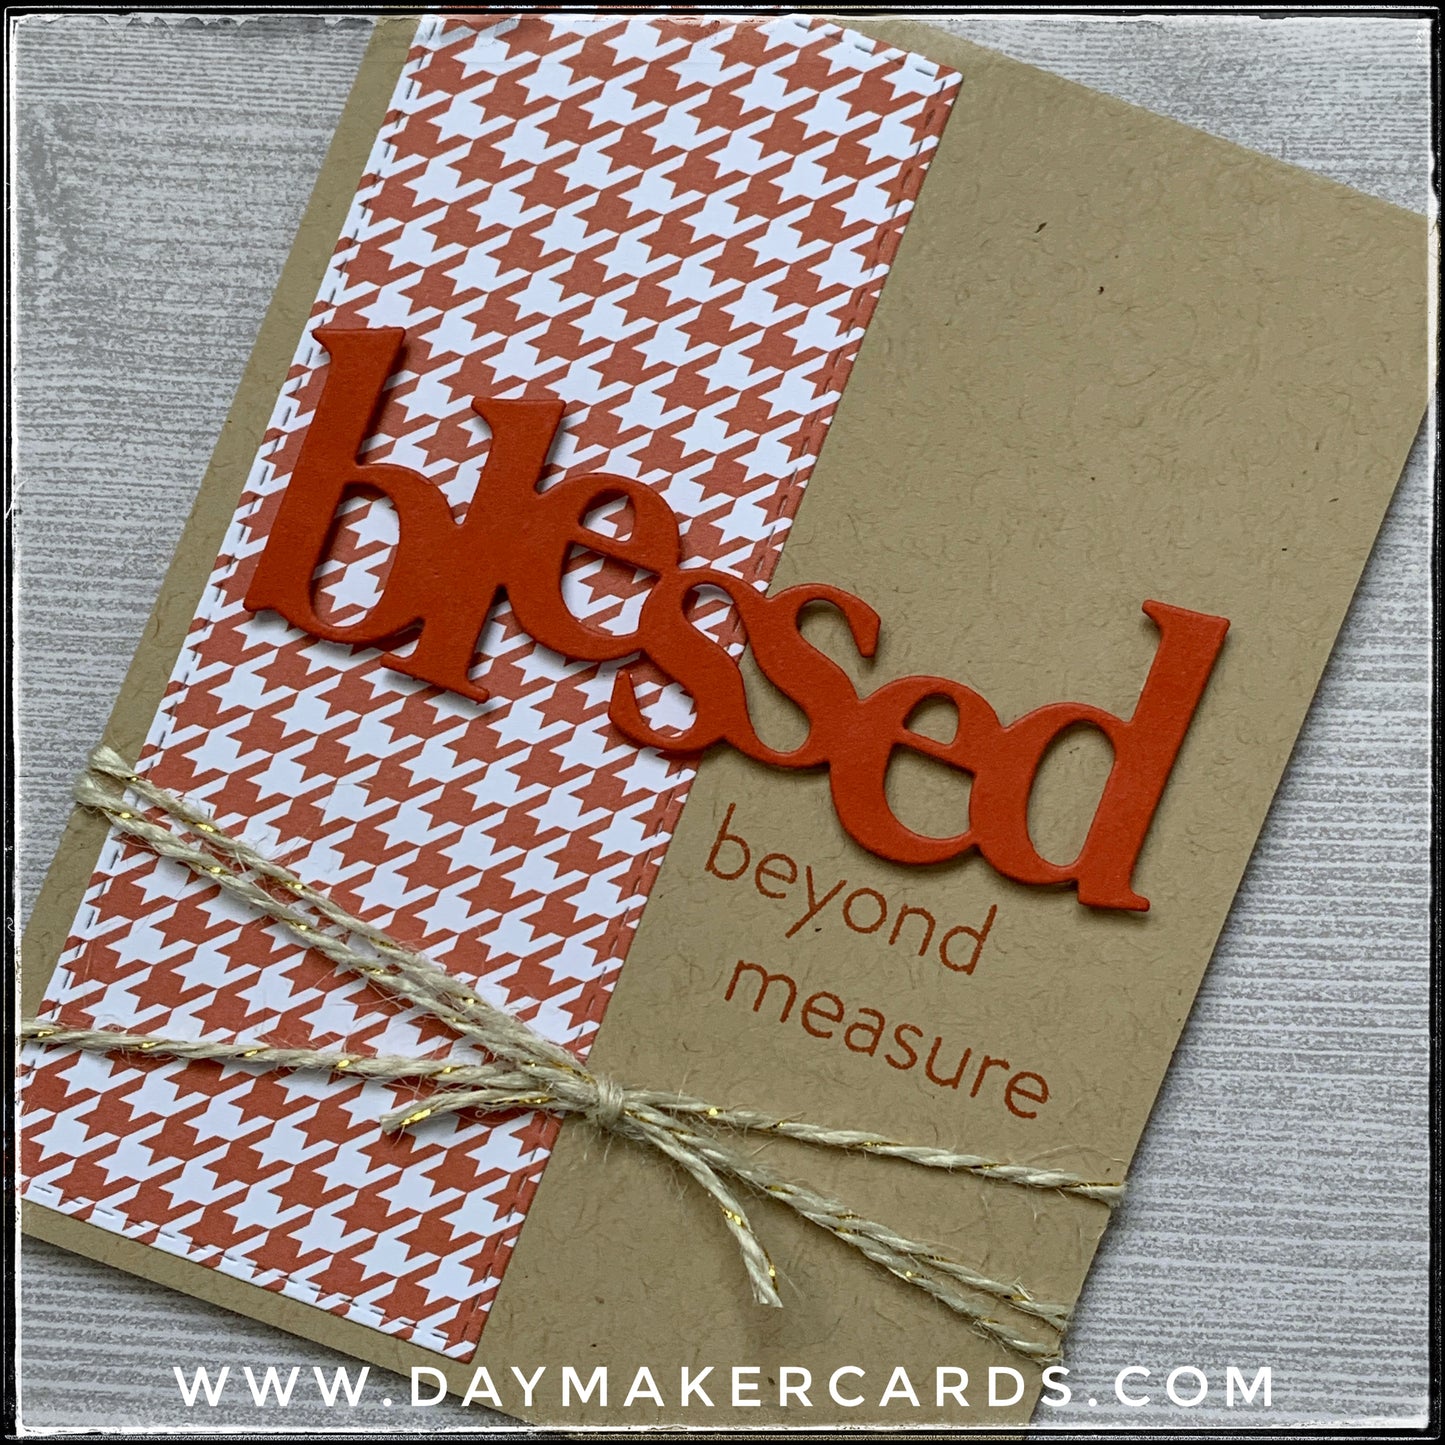 Blessed Beyond Measure Handmade Card